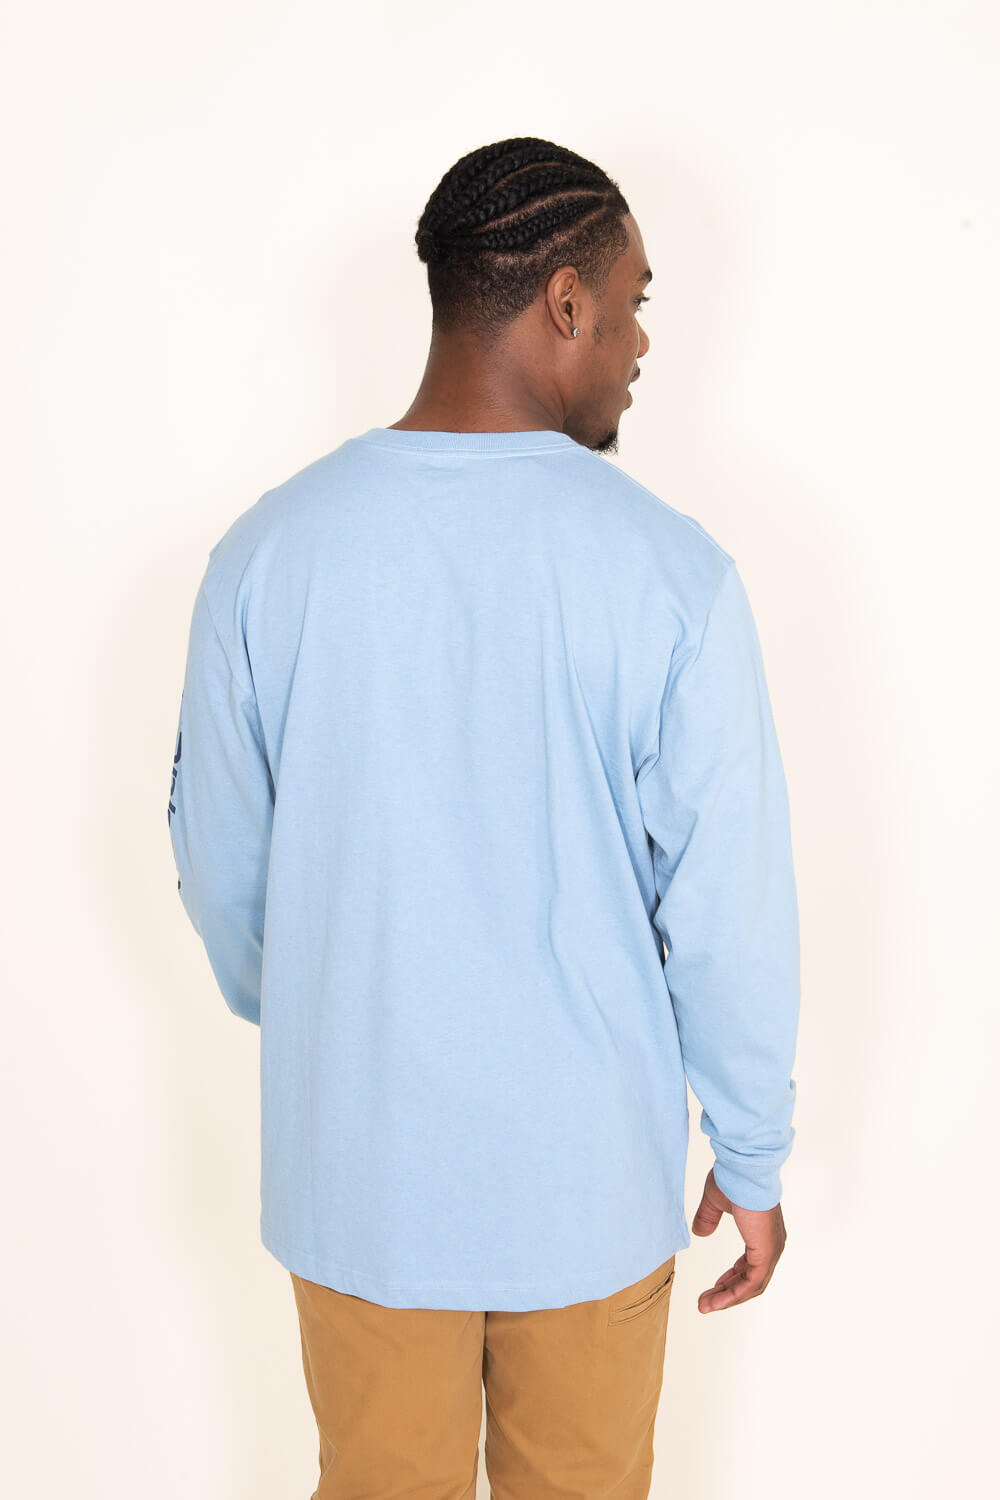 Carhartt Loose Fit Long Sleeve Graphic Tee for Men in Blue | K231-H74 –  Glik's